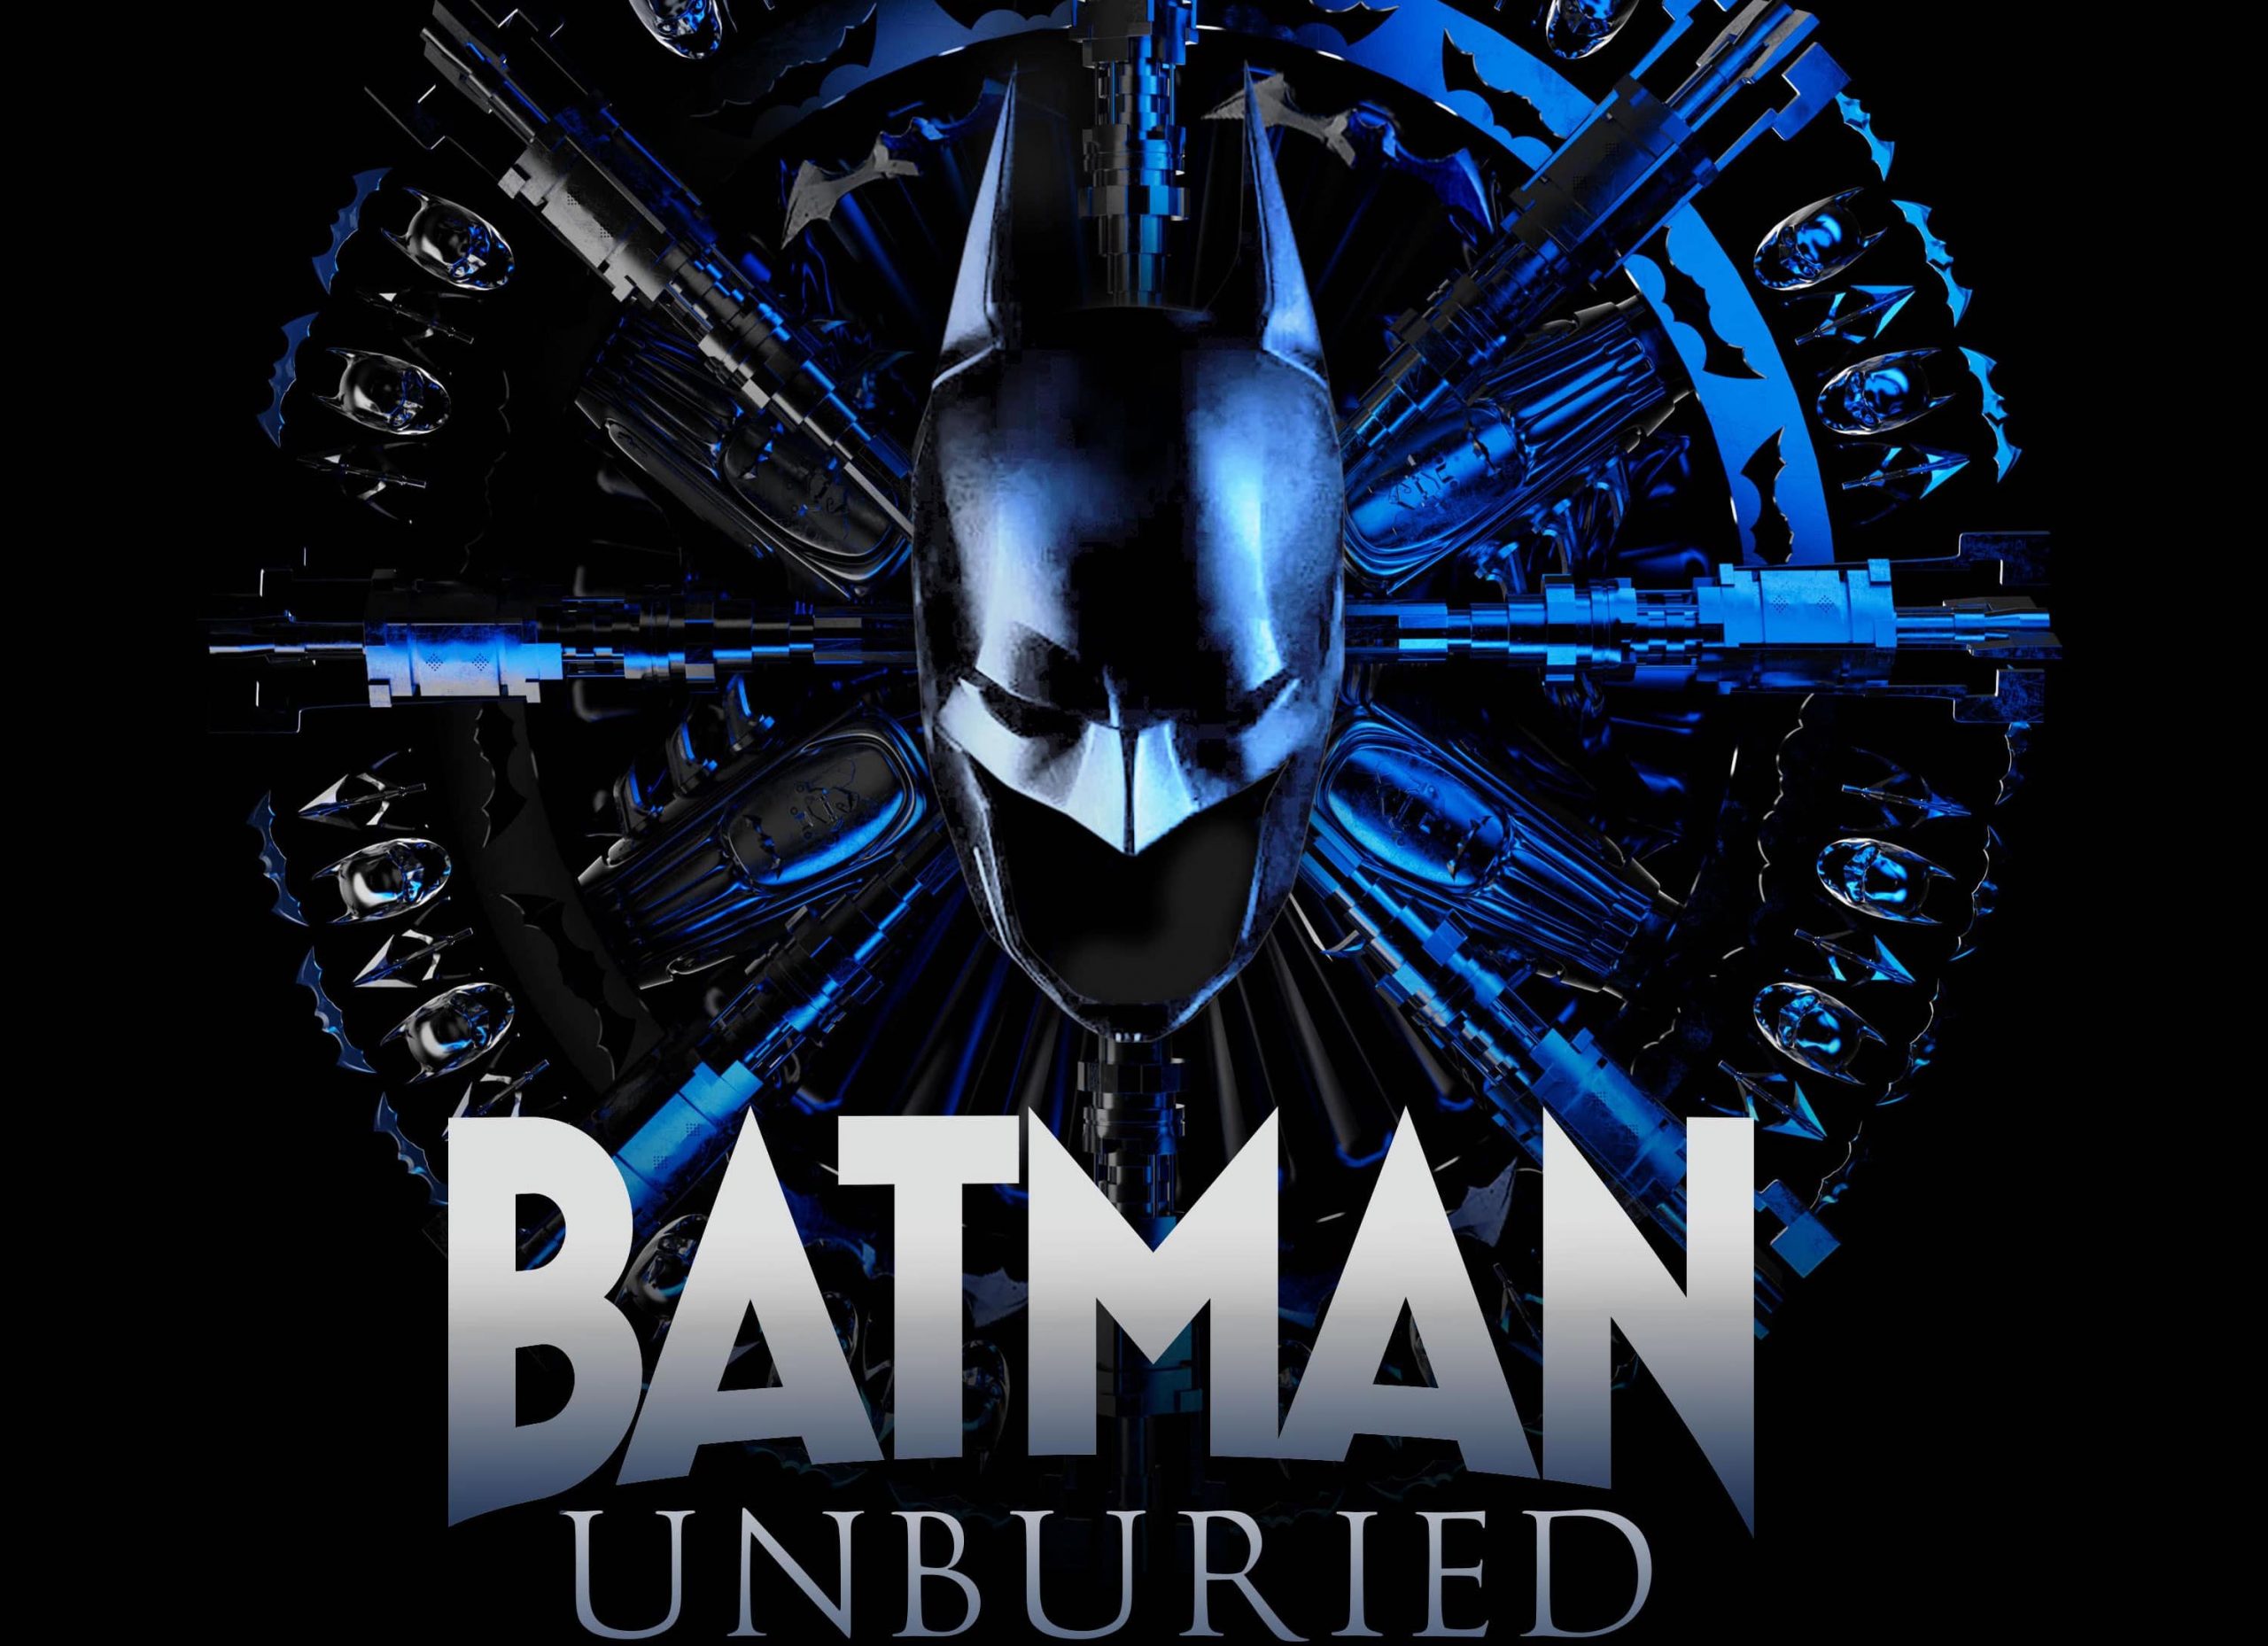 ‘Batman Unburied’ audio drama launching globally May 3rd with forensic pathologist Bruce Wayne